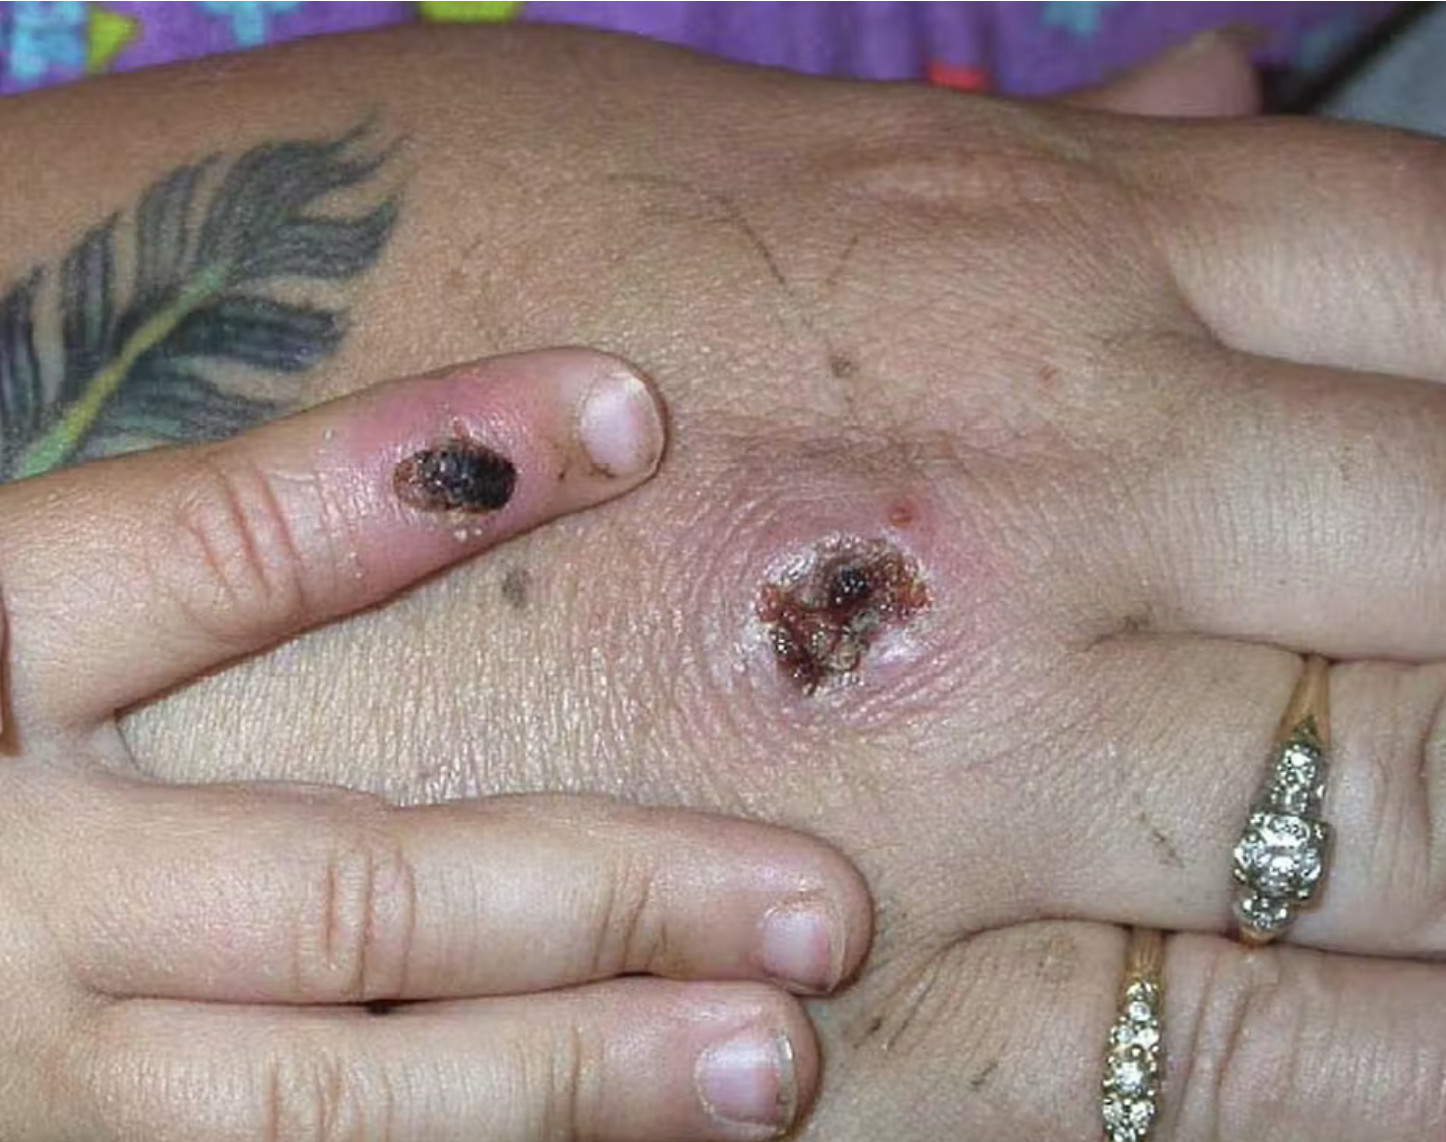 monkeypox scabs on hands